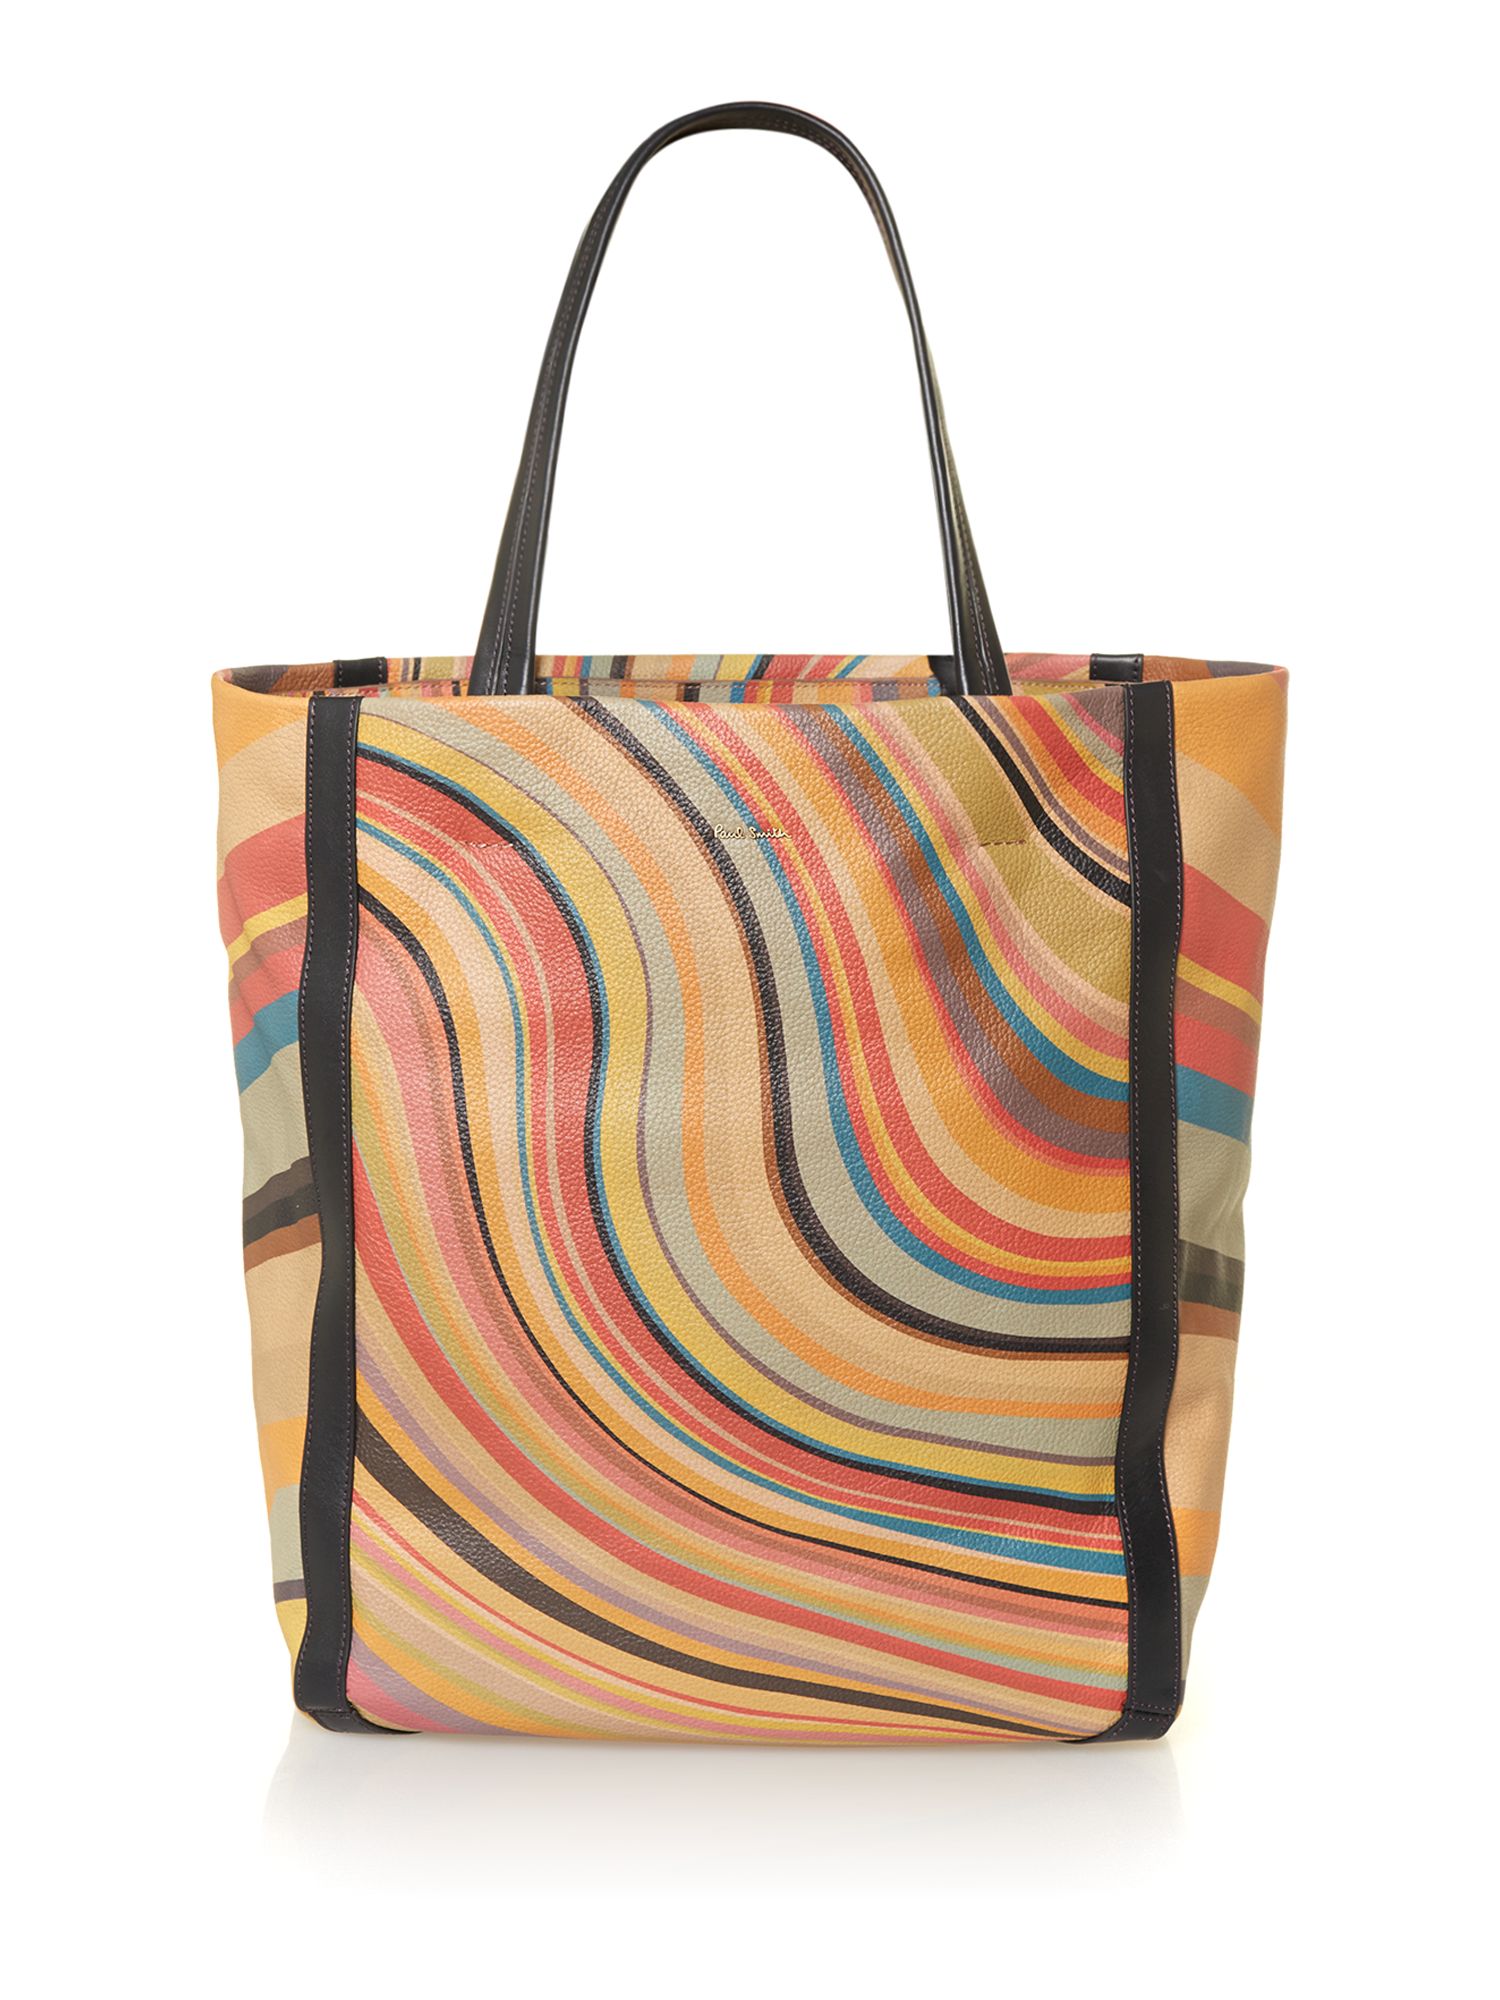 Paul Smith Swirl Print Tote Bag in Beige (Multi-Coloured) | Lyst